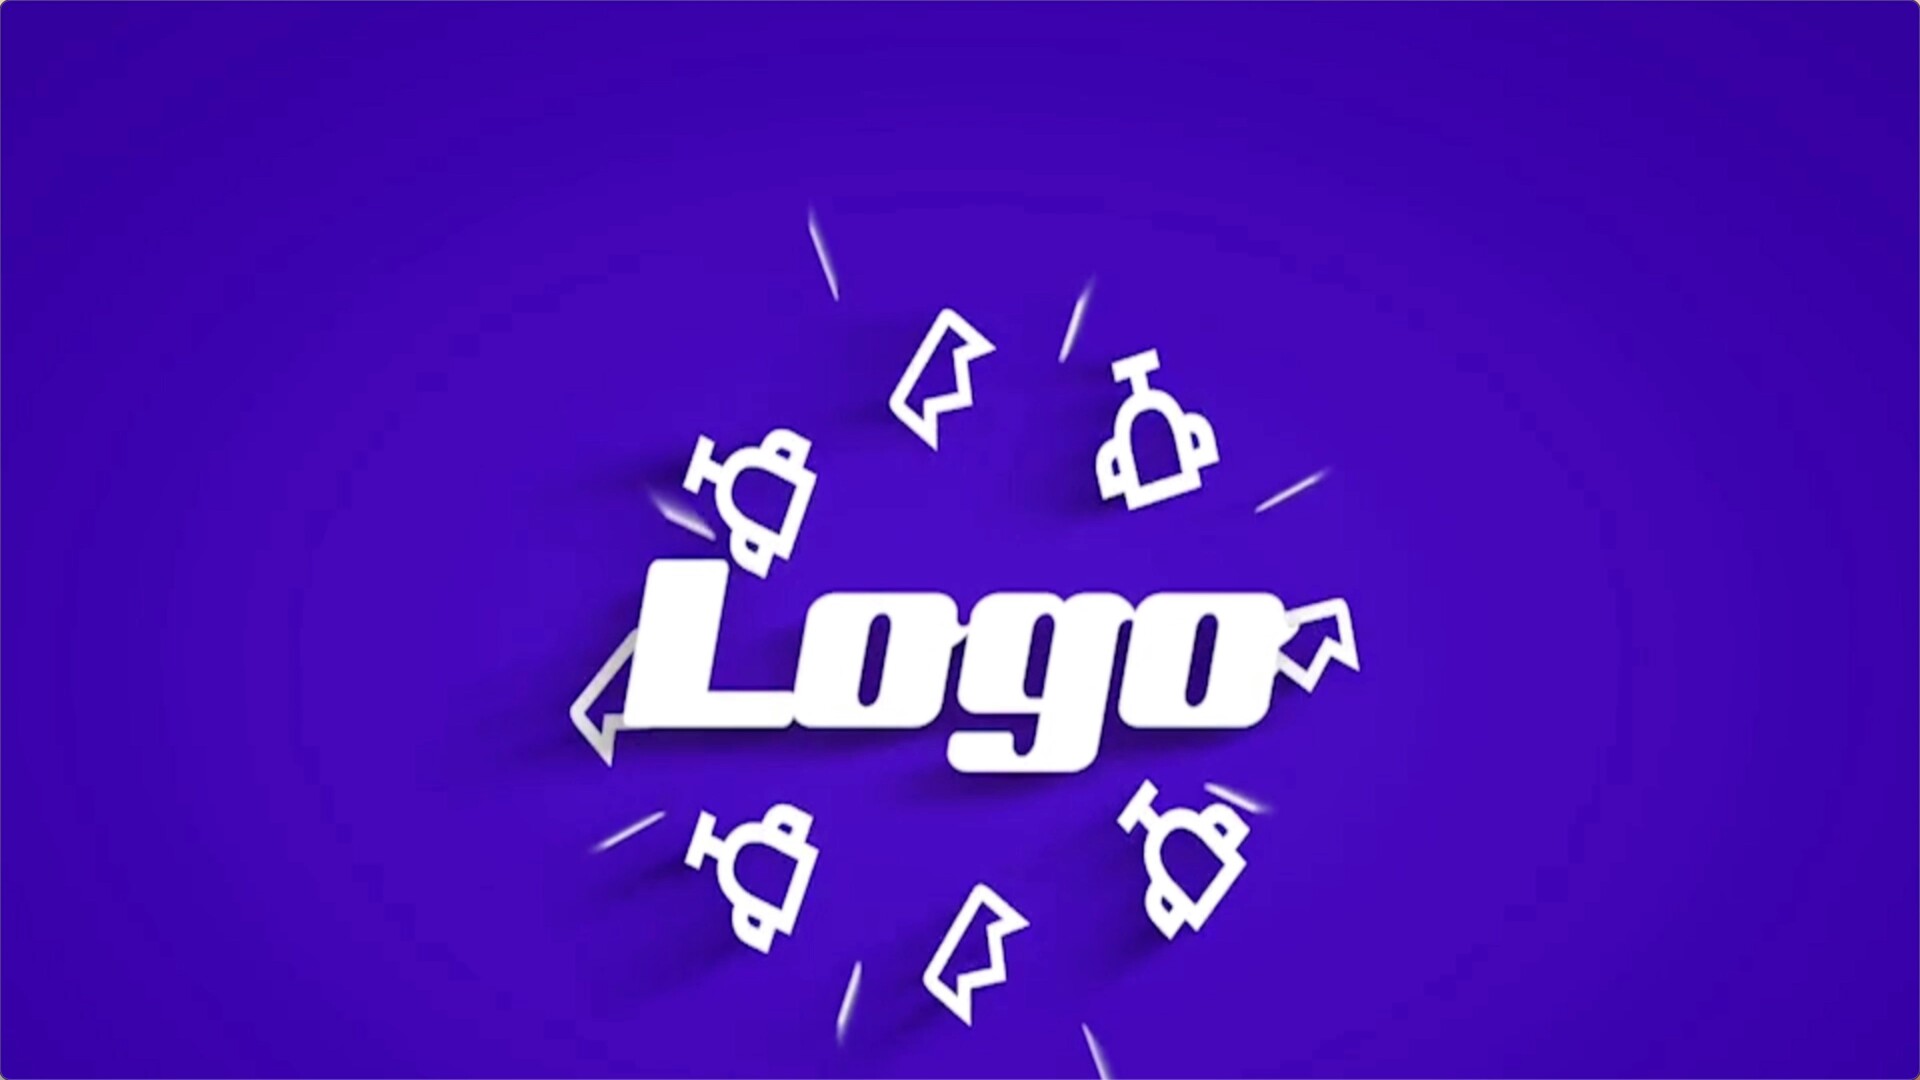 fcpx插件 发散抖动效果徽标LOGO展示片头模板 Twitch Logo Reveal